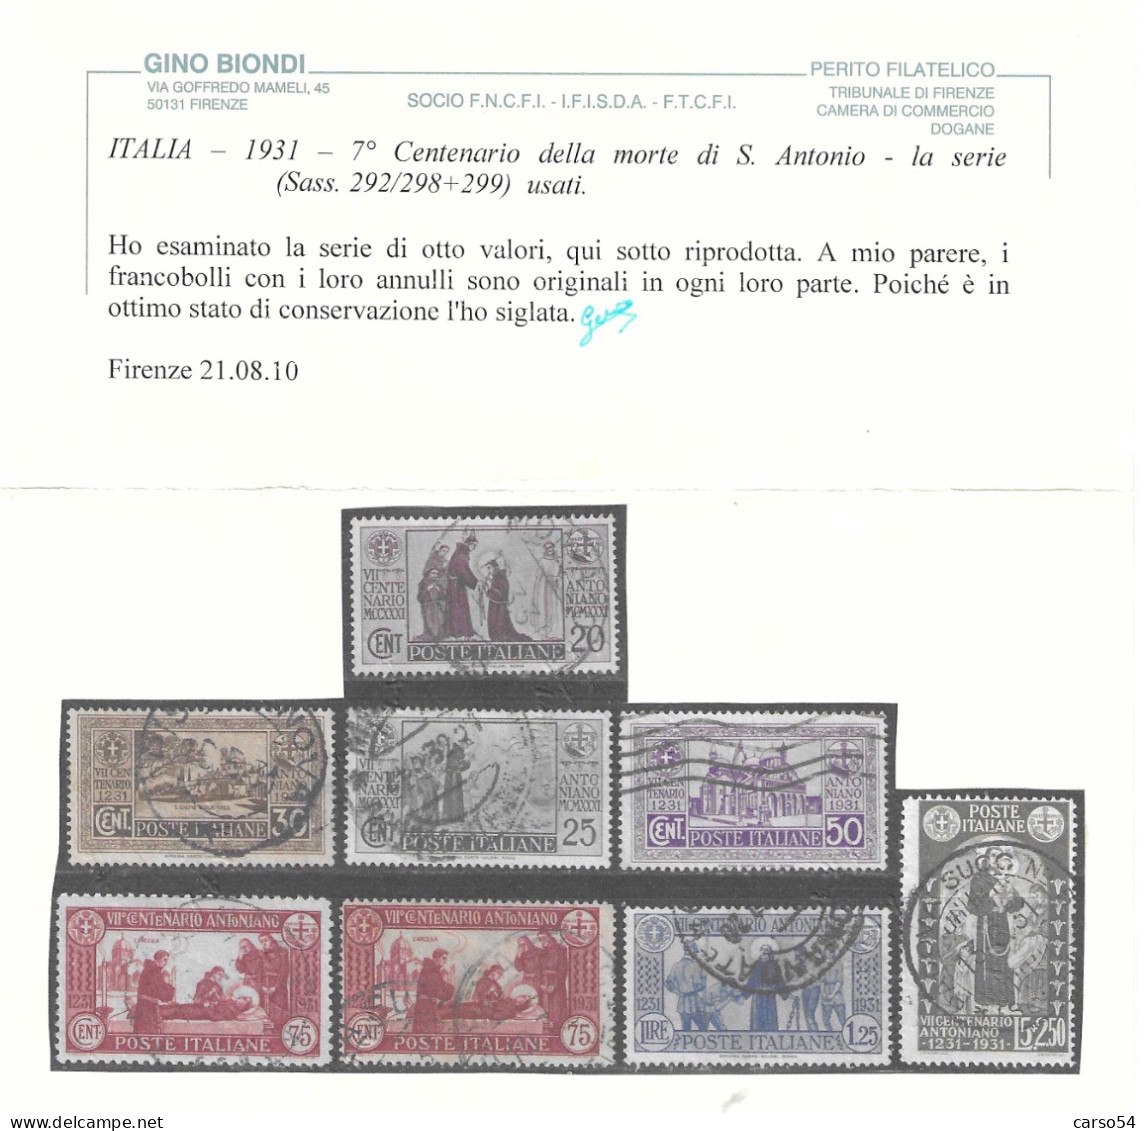 1931 - 7^ CENTENARIO MORTE S.ANTONIO SERIE DI 7 VALORI USATI  - SASSONE EURO 1.300 - Oblitérés